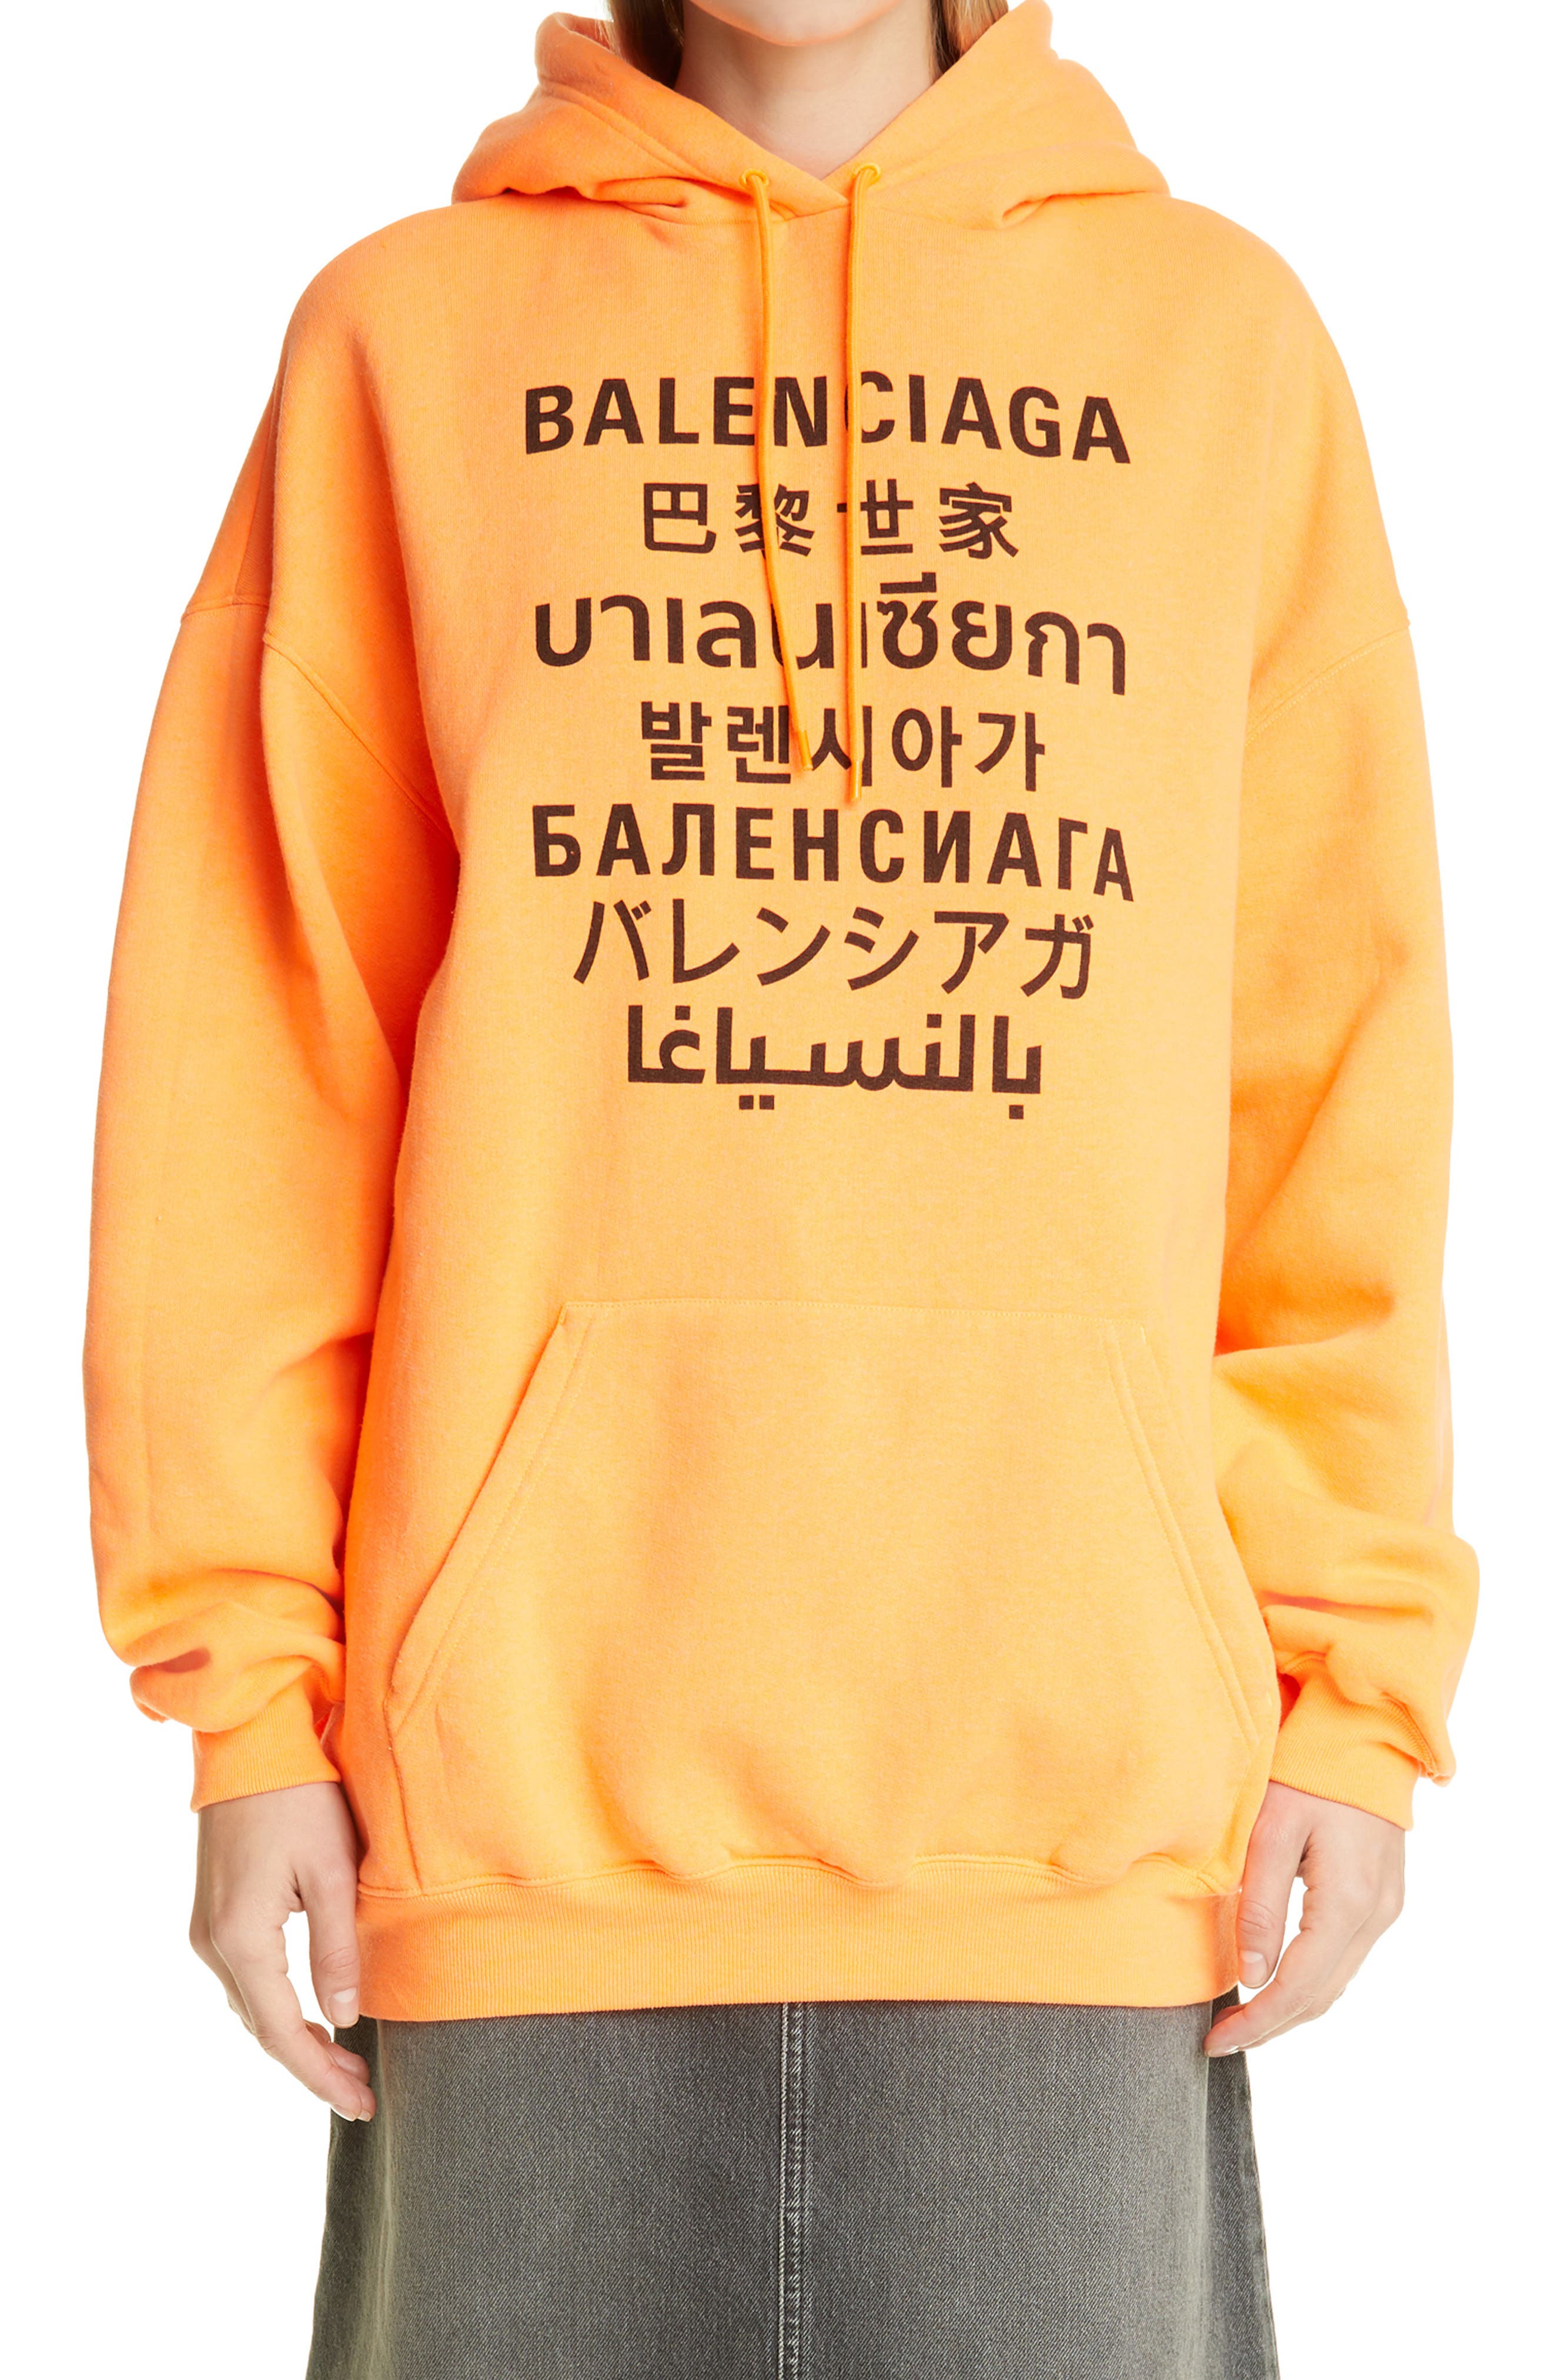 balenciaga hoodie womens price